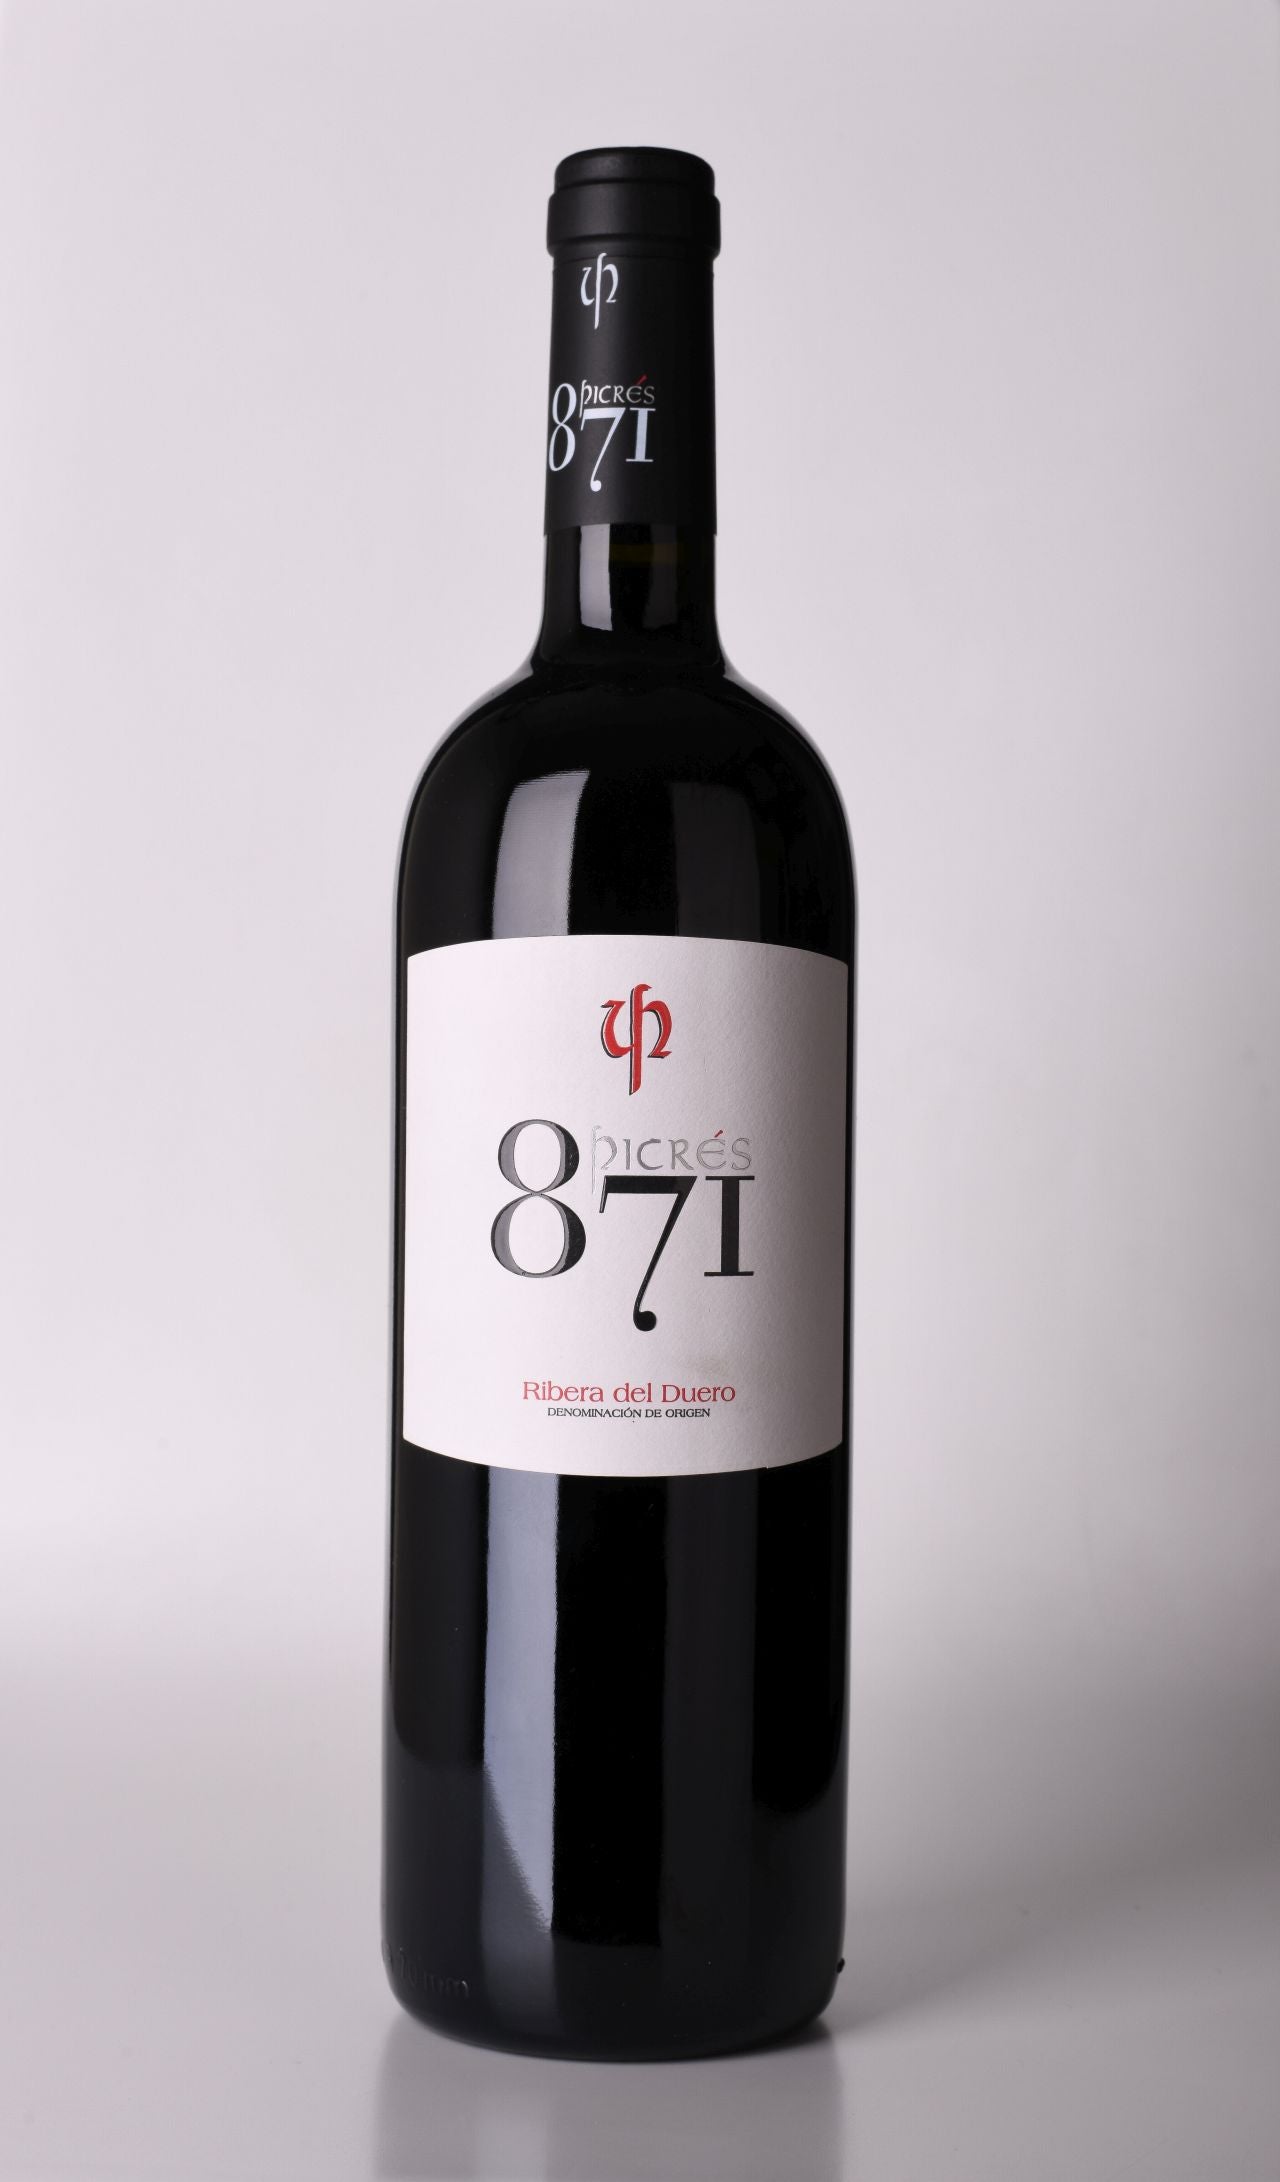 Ribera del Duero | | 871 – Rotwein Spanischer Español 2009 Picres Vino